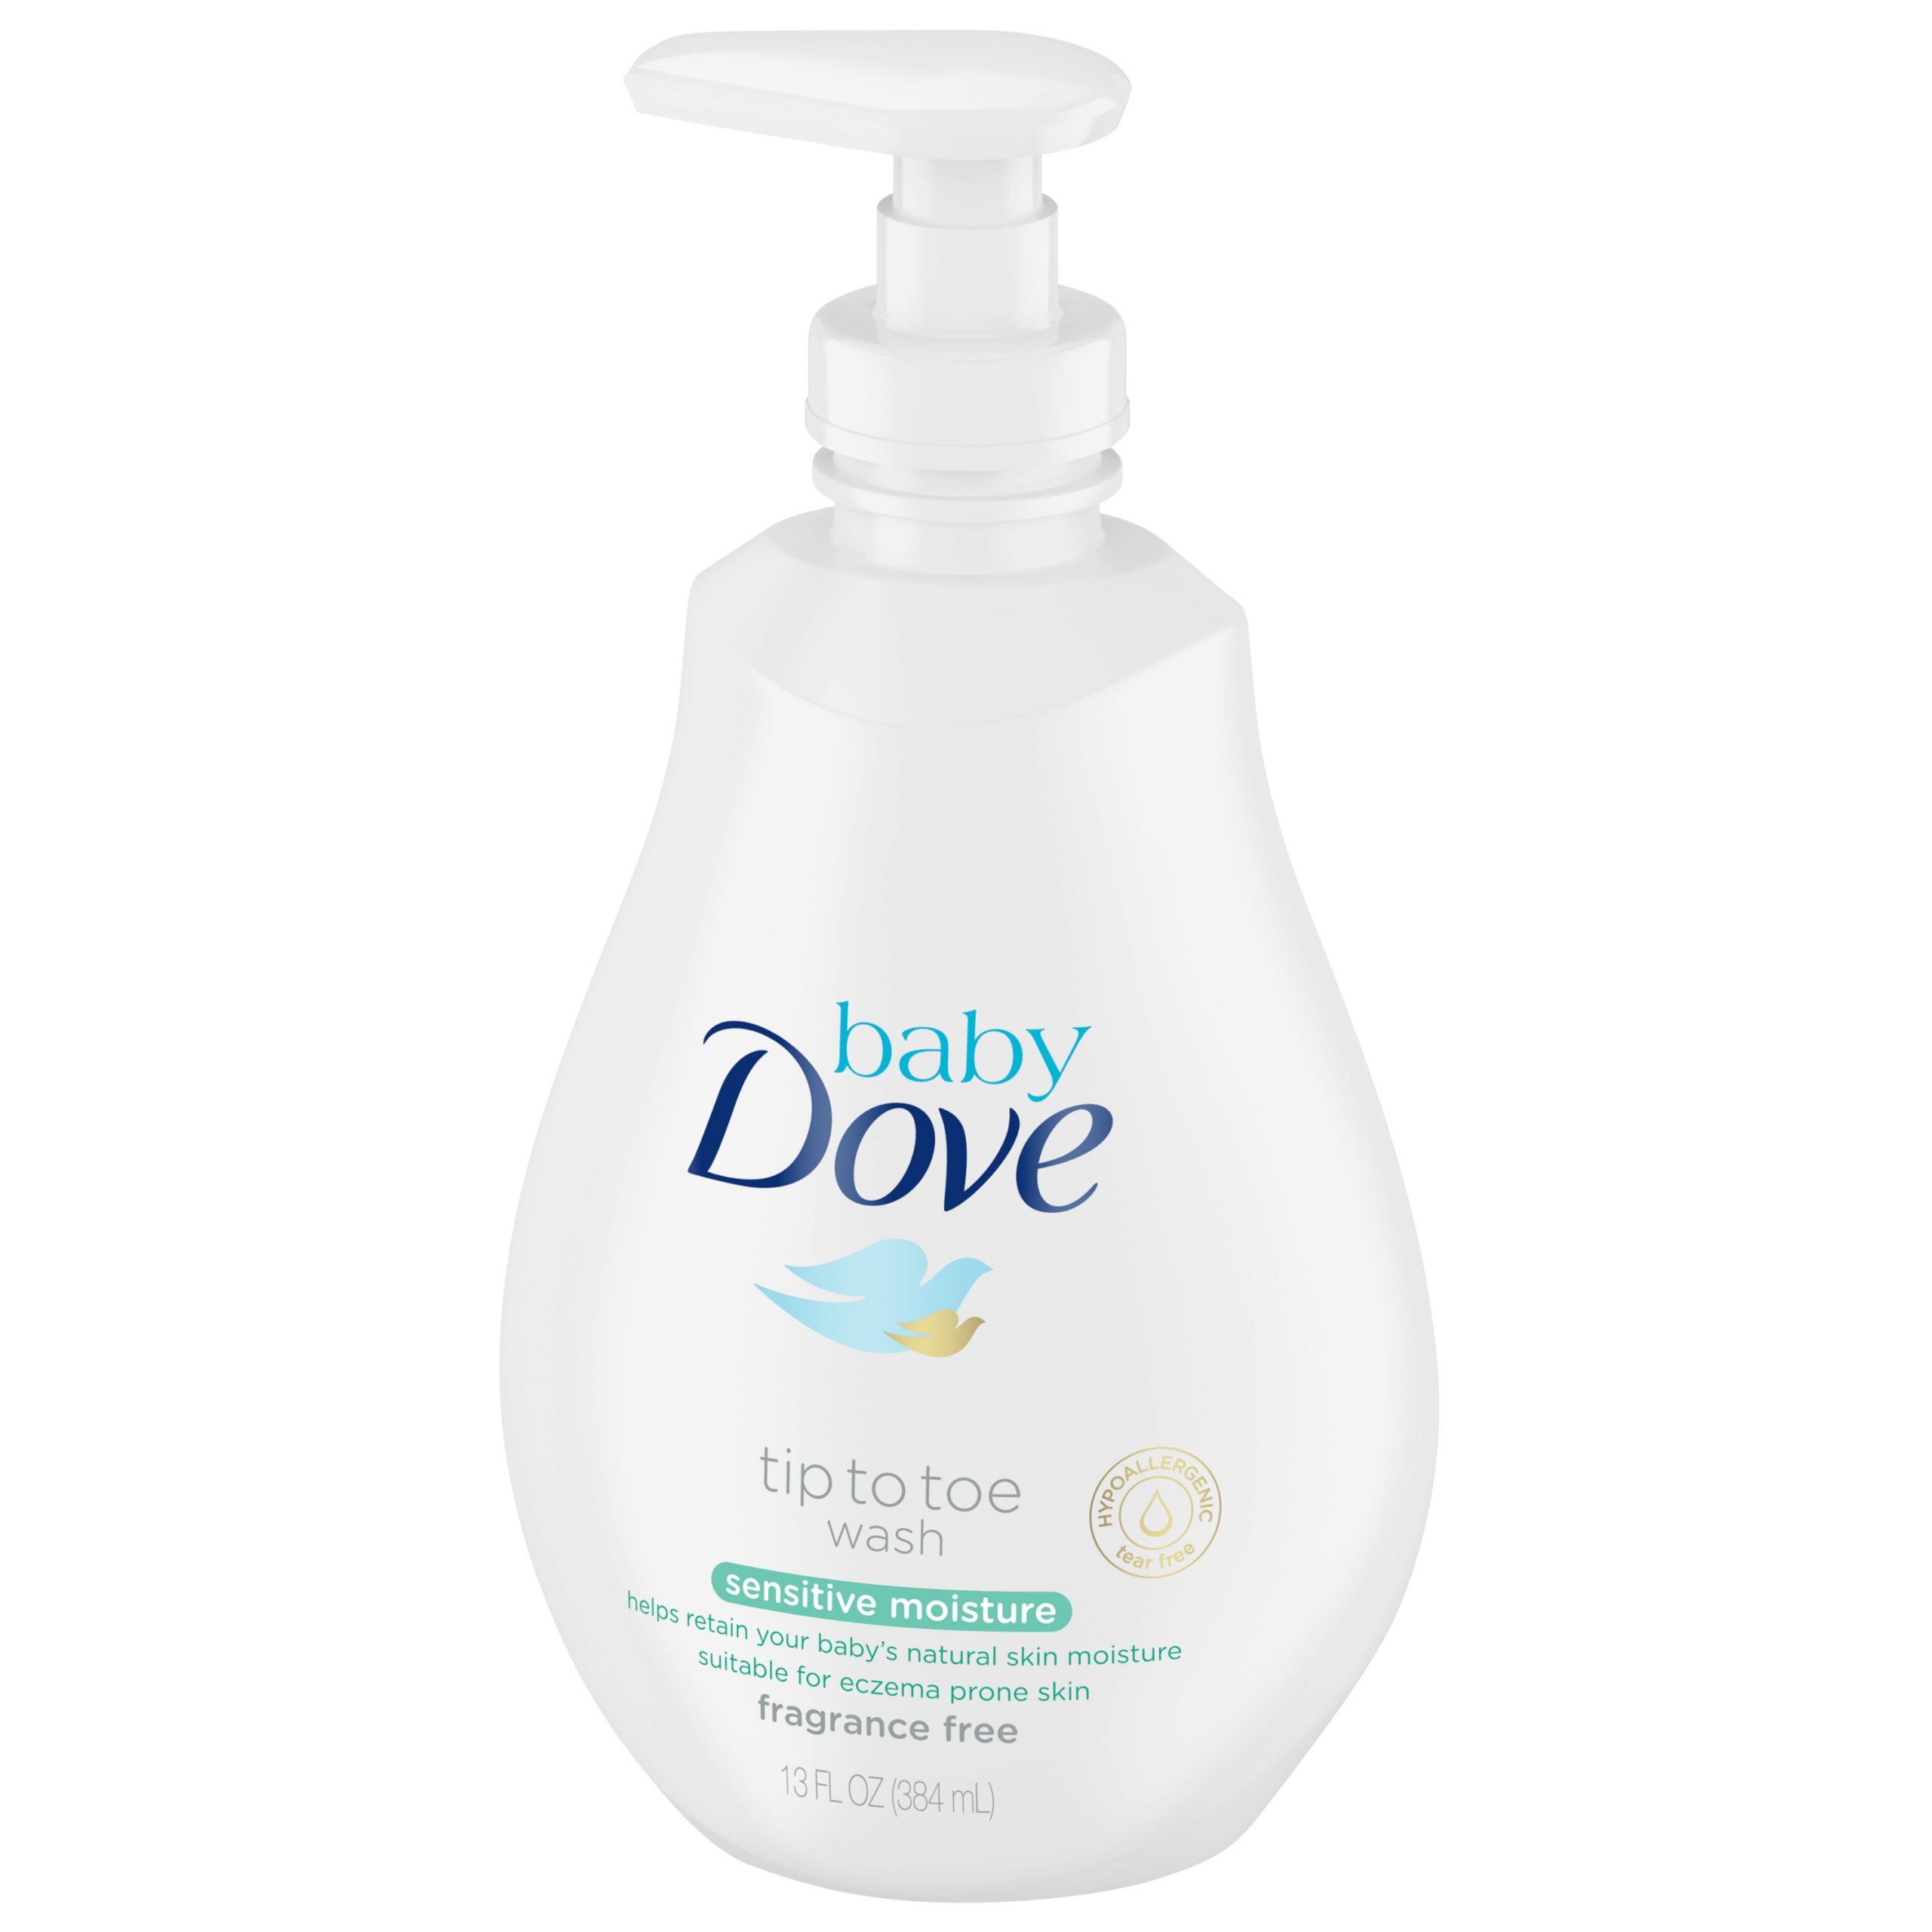 Baby Dove Tip to Toe Wash and Shampoo Sensitive Moisture ...